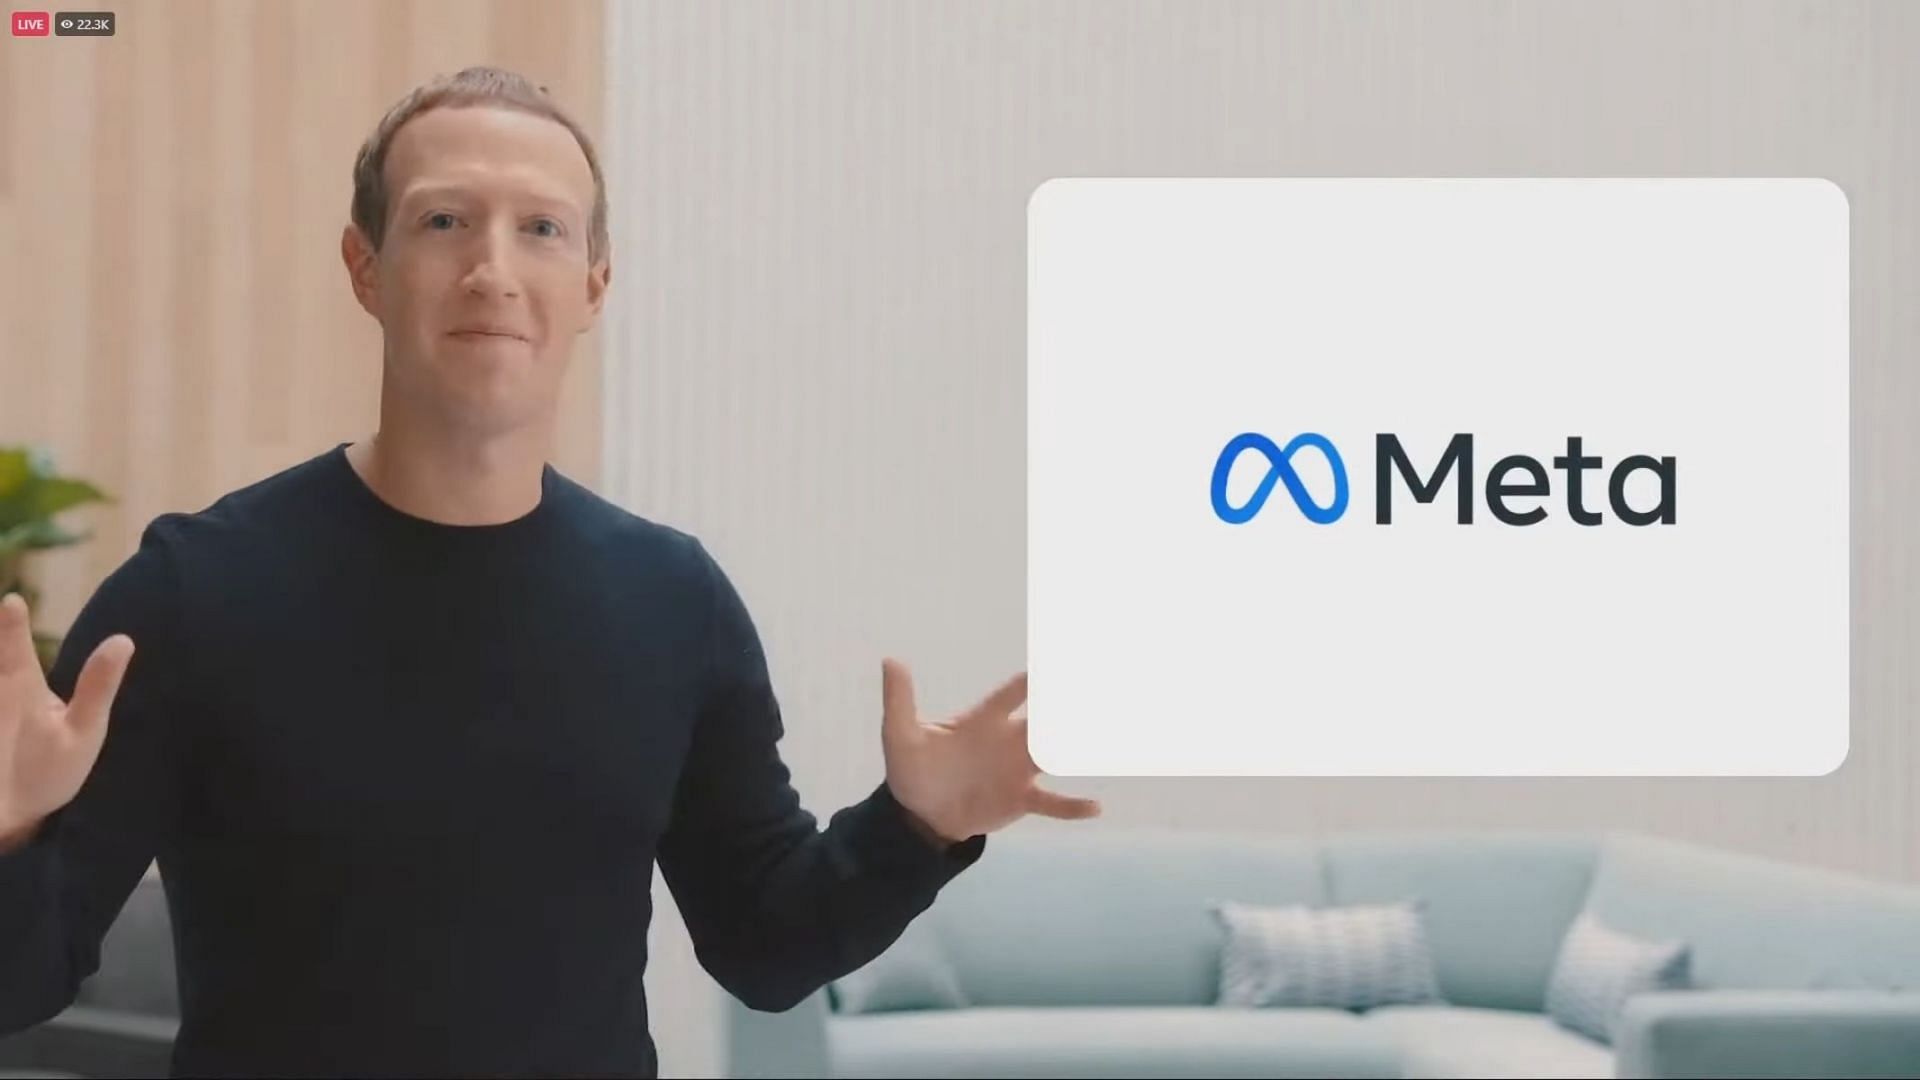 CEO Mark Zuckerberg introducing Meta (Image via Facebook Inc.)